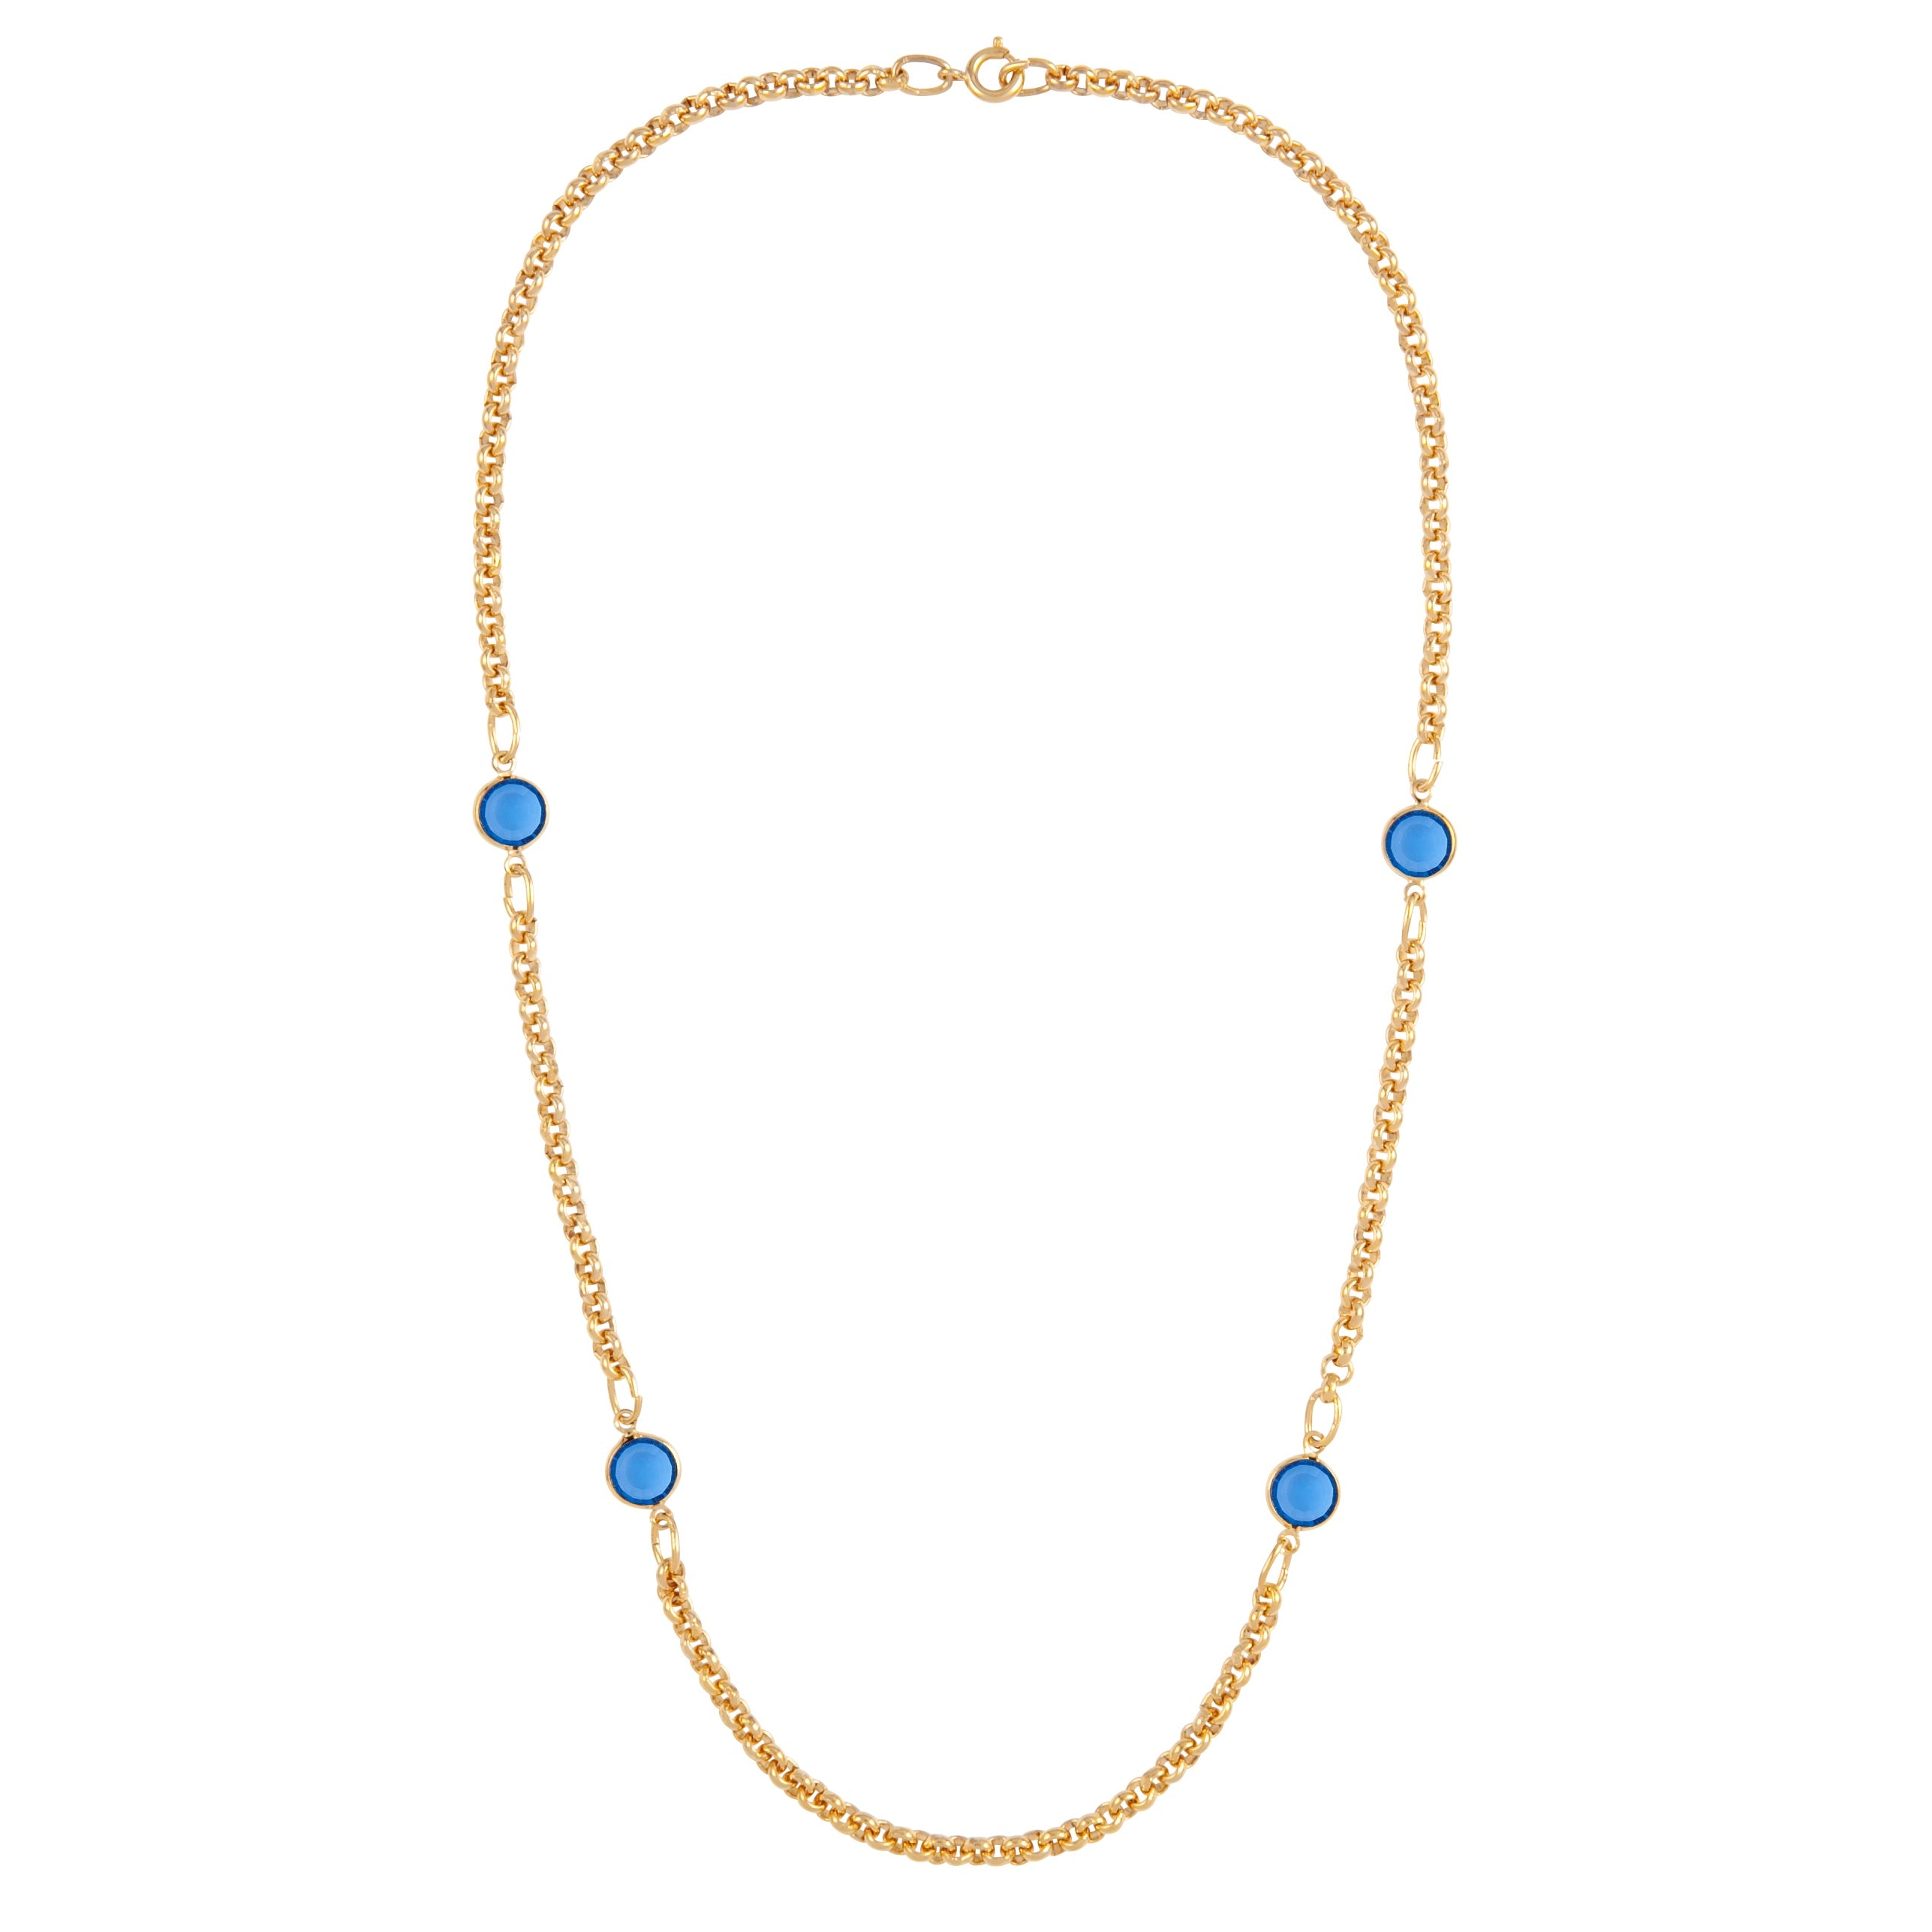 1990s Vintage Gold Plated Blue Sapphire Swarovski Crystal Necklace